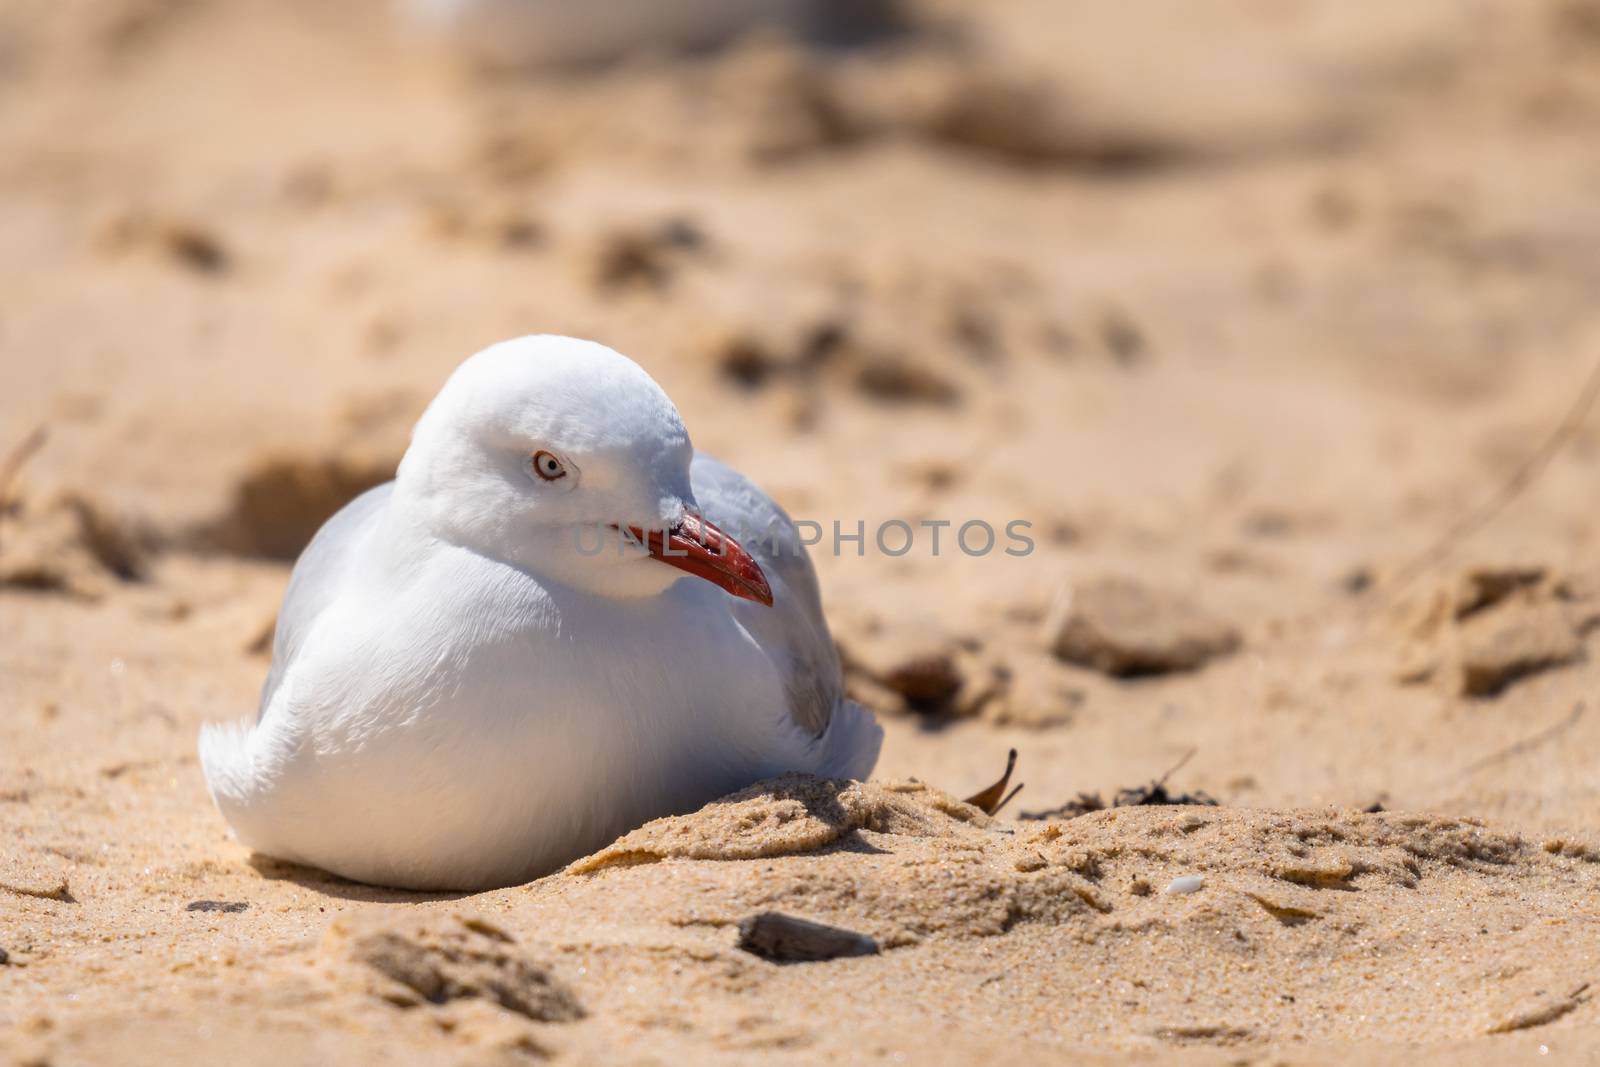 Seagull on Watson bay sand, Sydney, NSW Australia by mauricallari